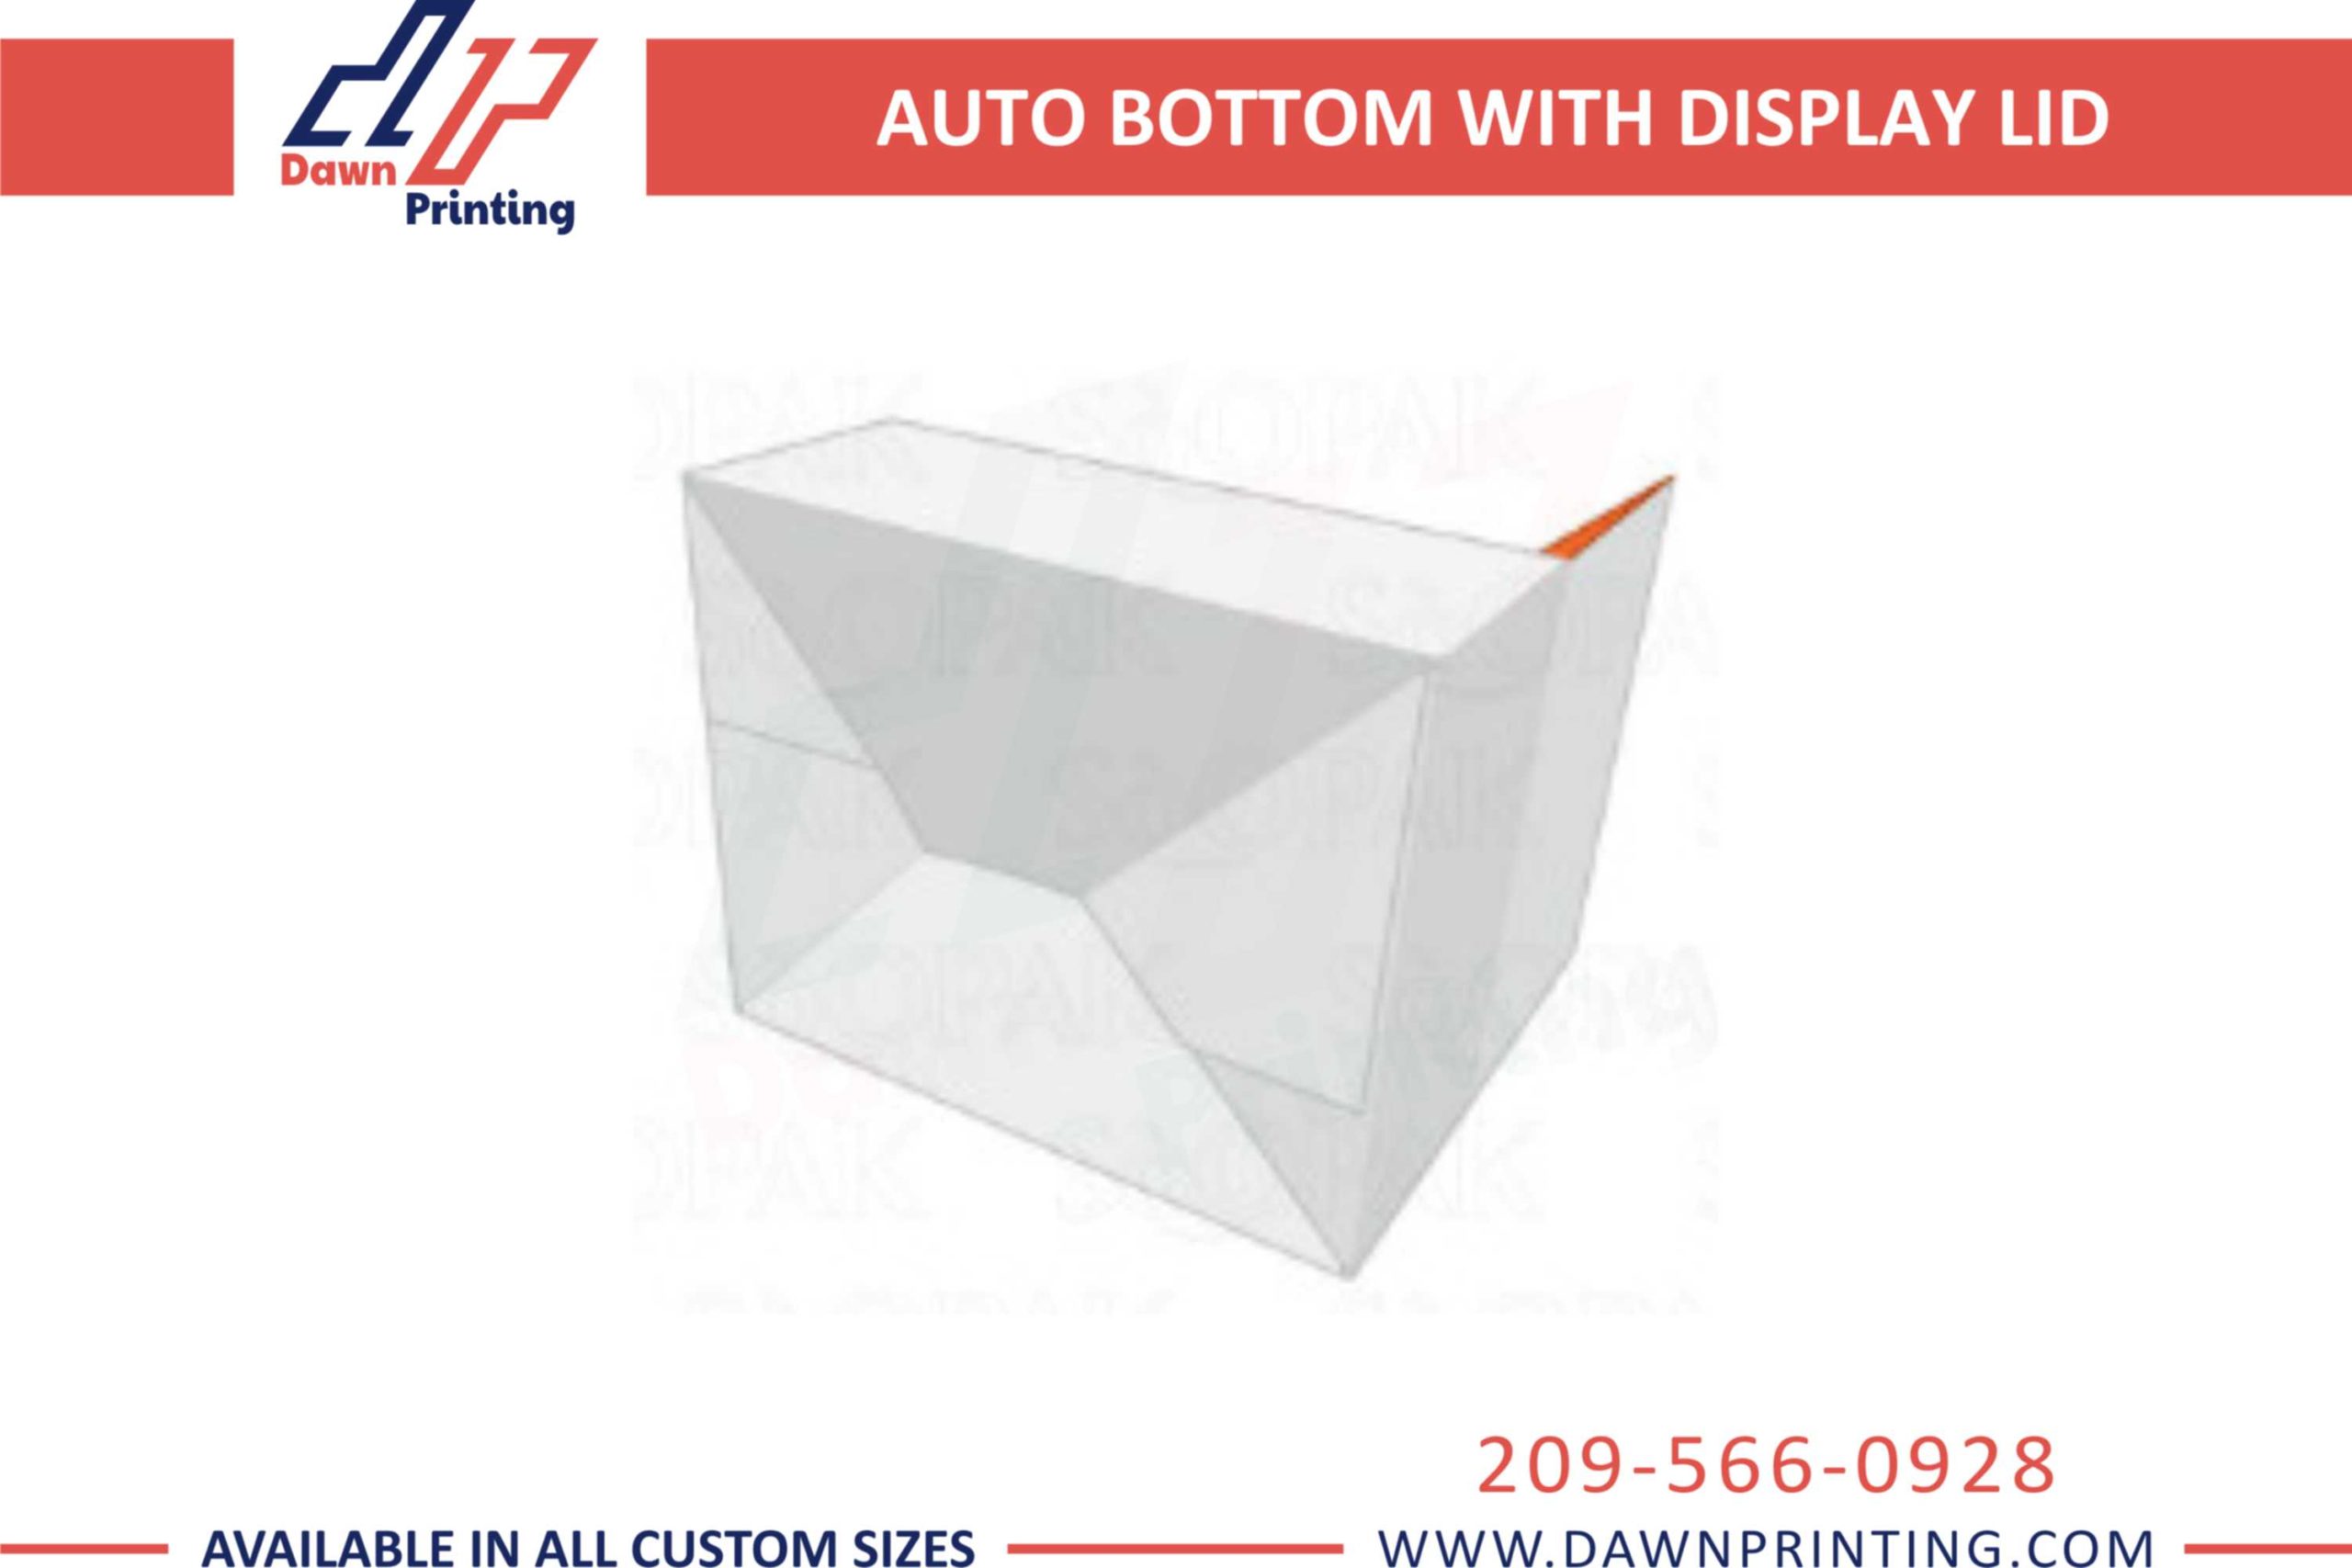 Auto Bottom with Display Lid Box - Dawn Printing